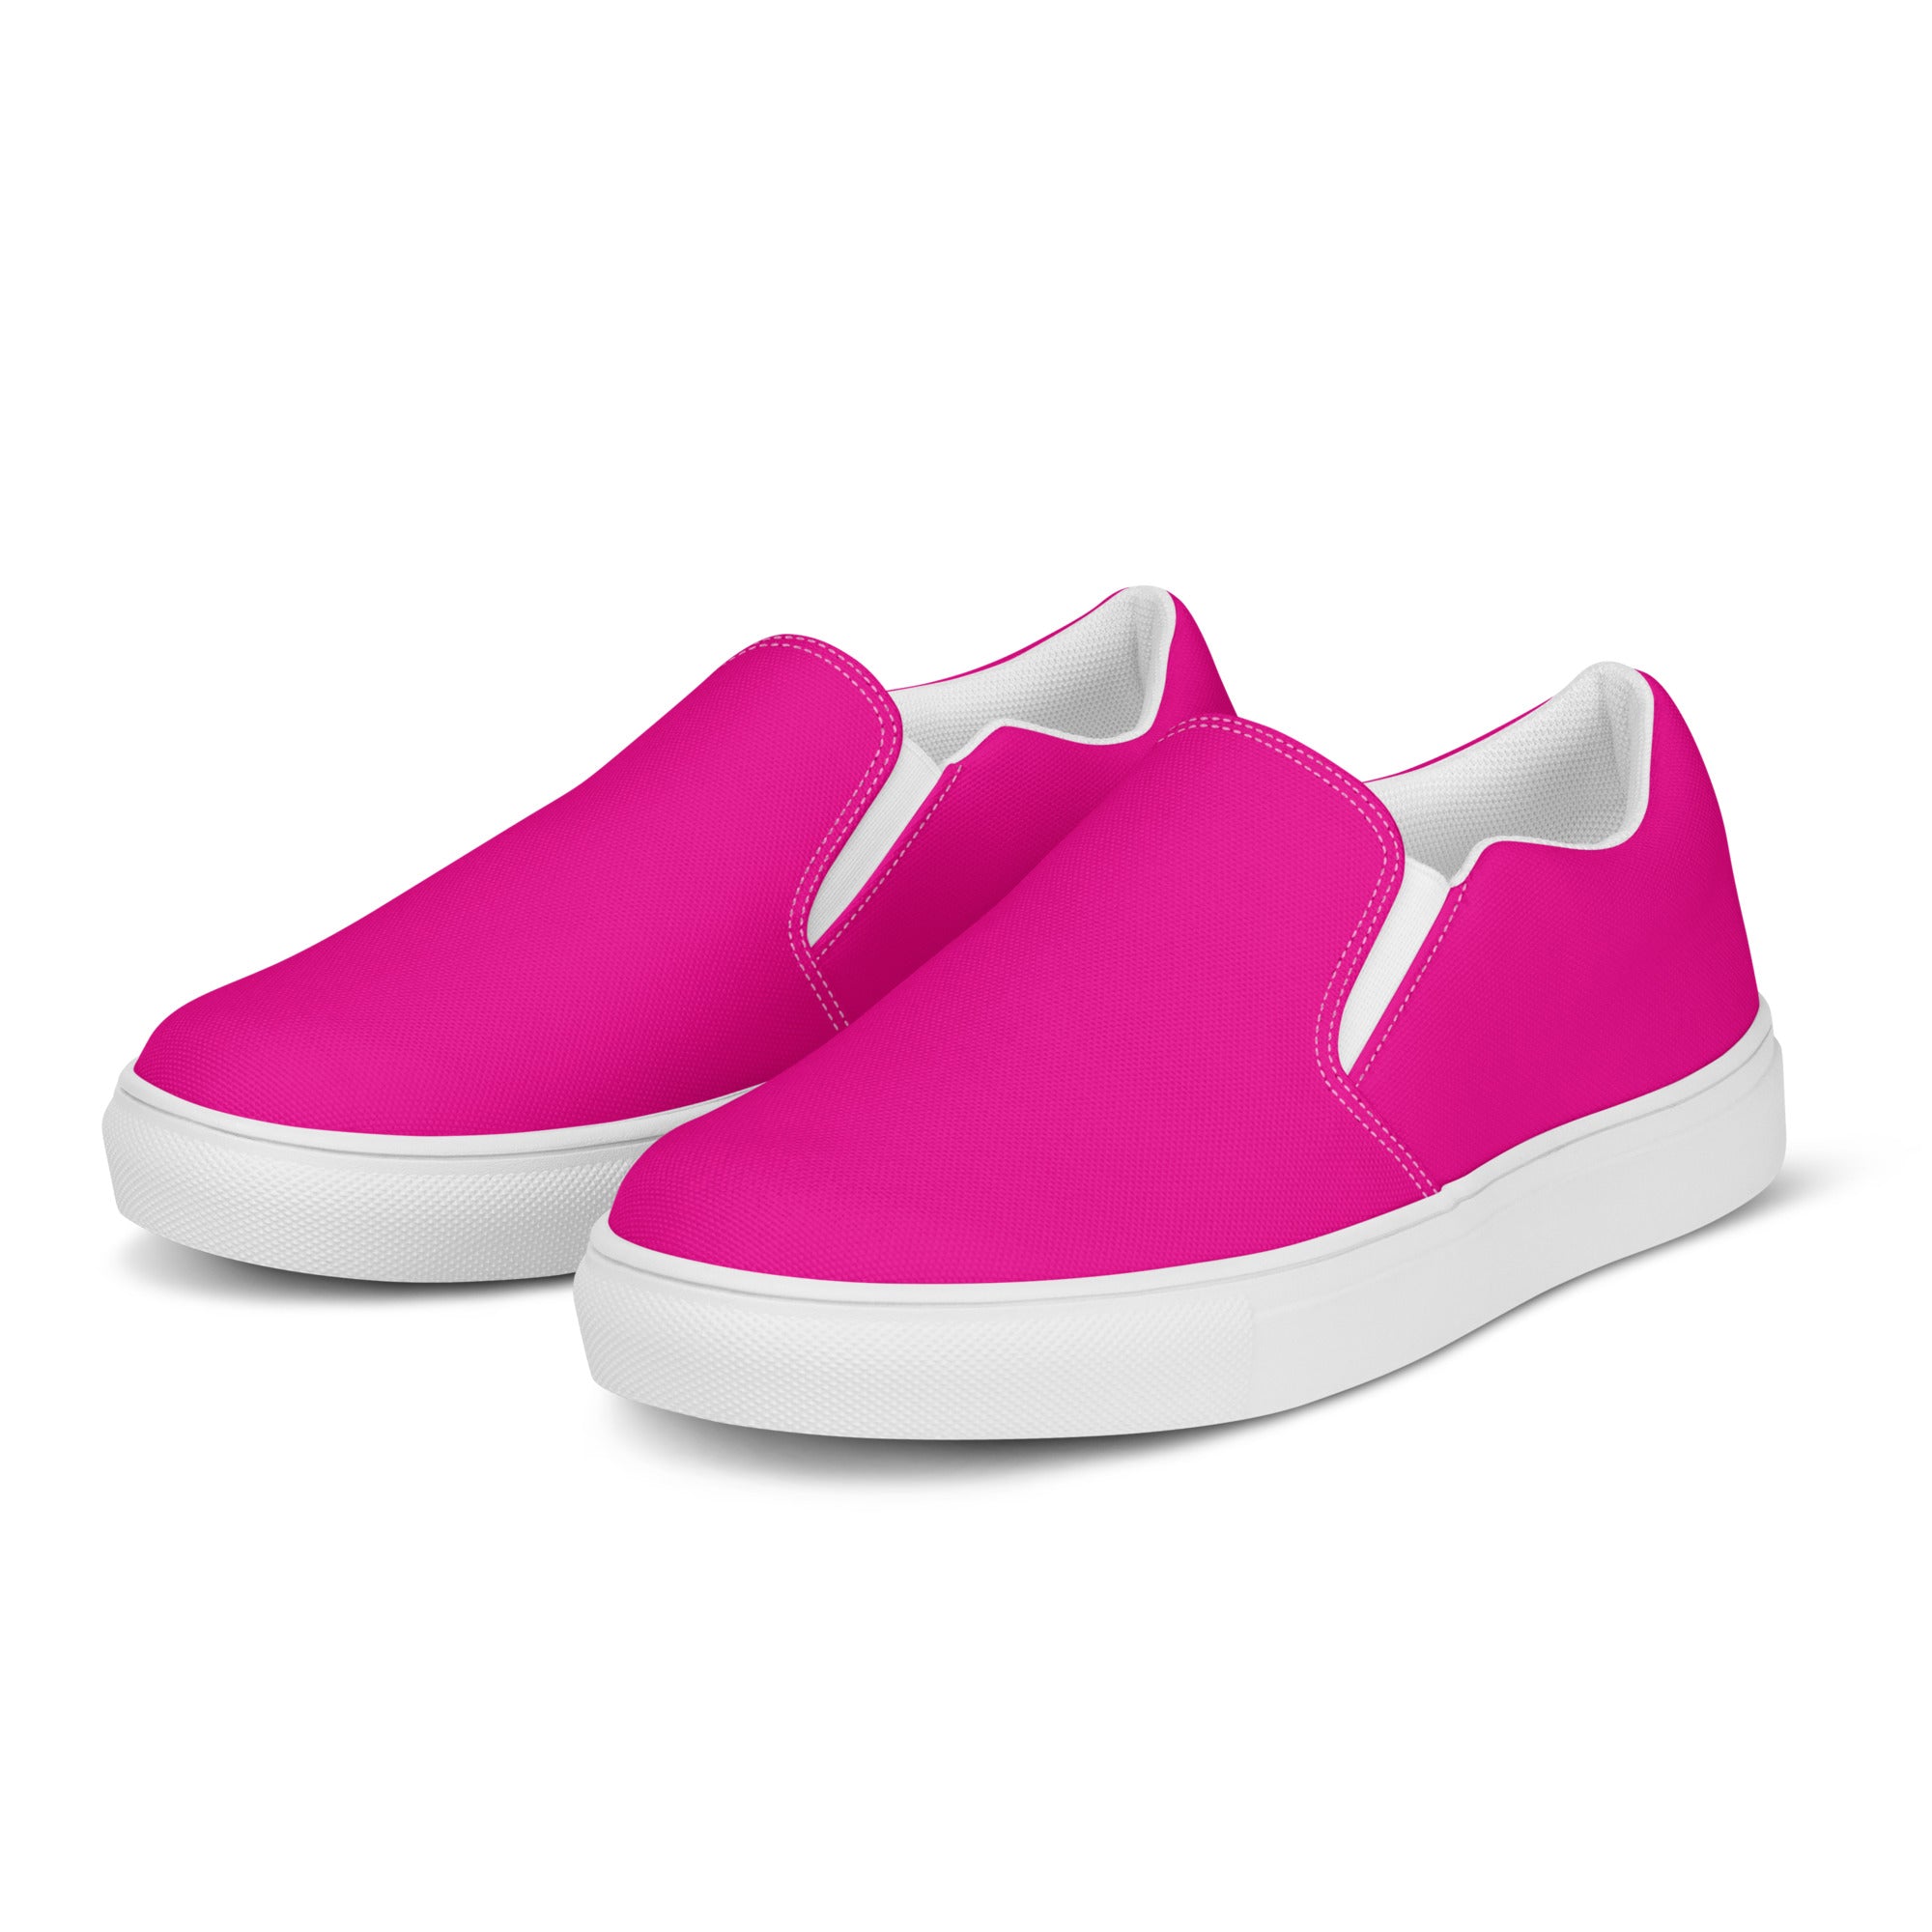 Rad Palm Pink Men’s Slip-On Canvas Shoes